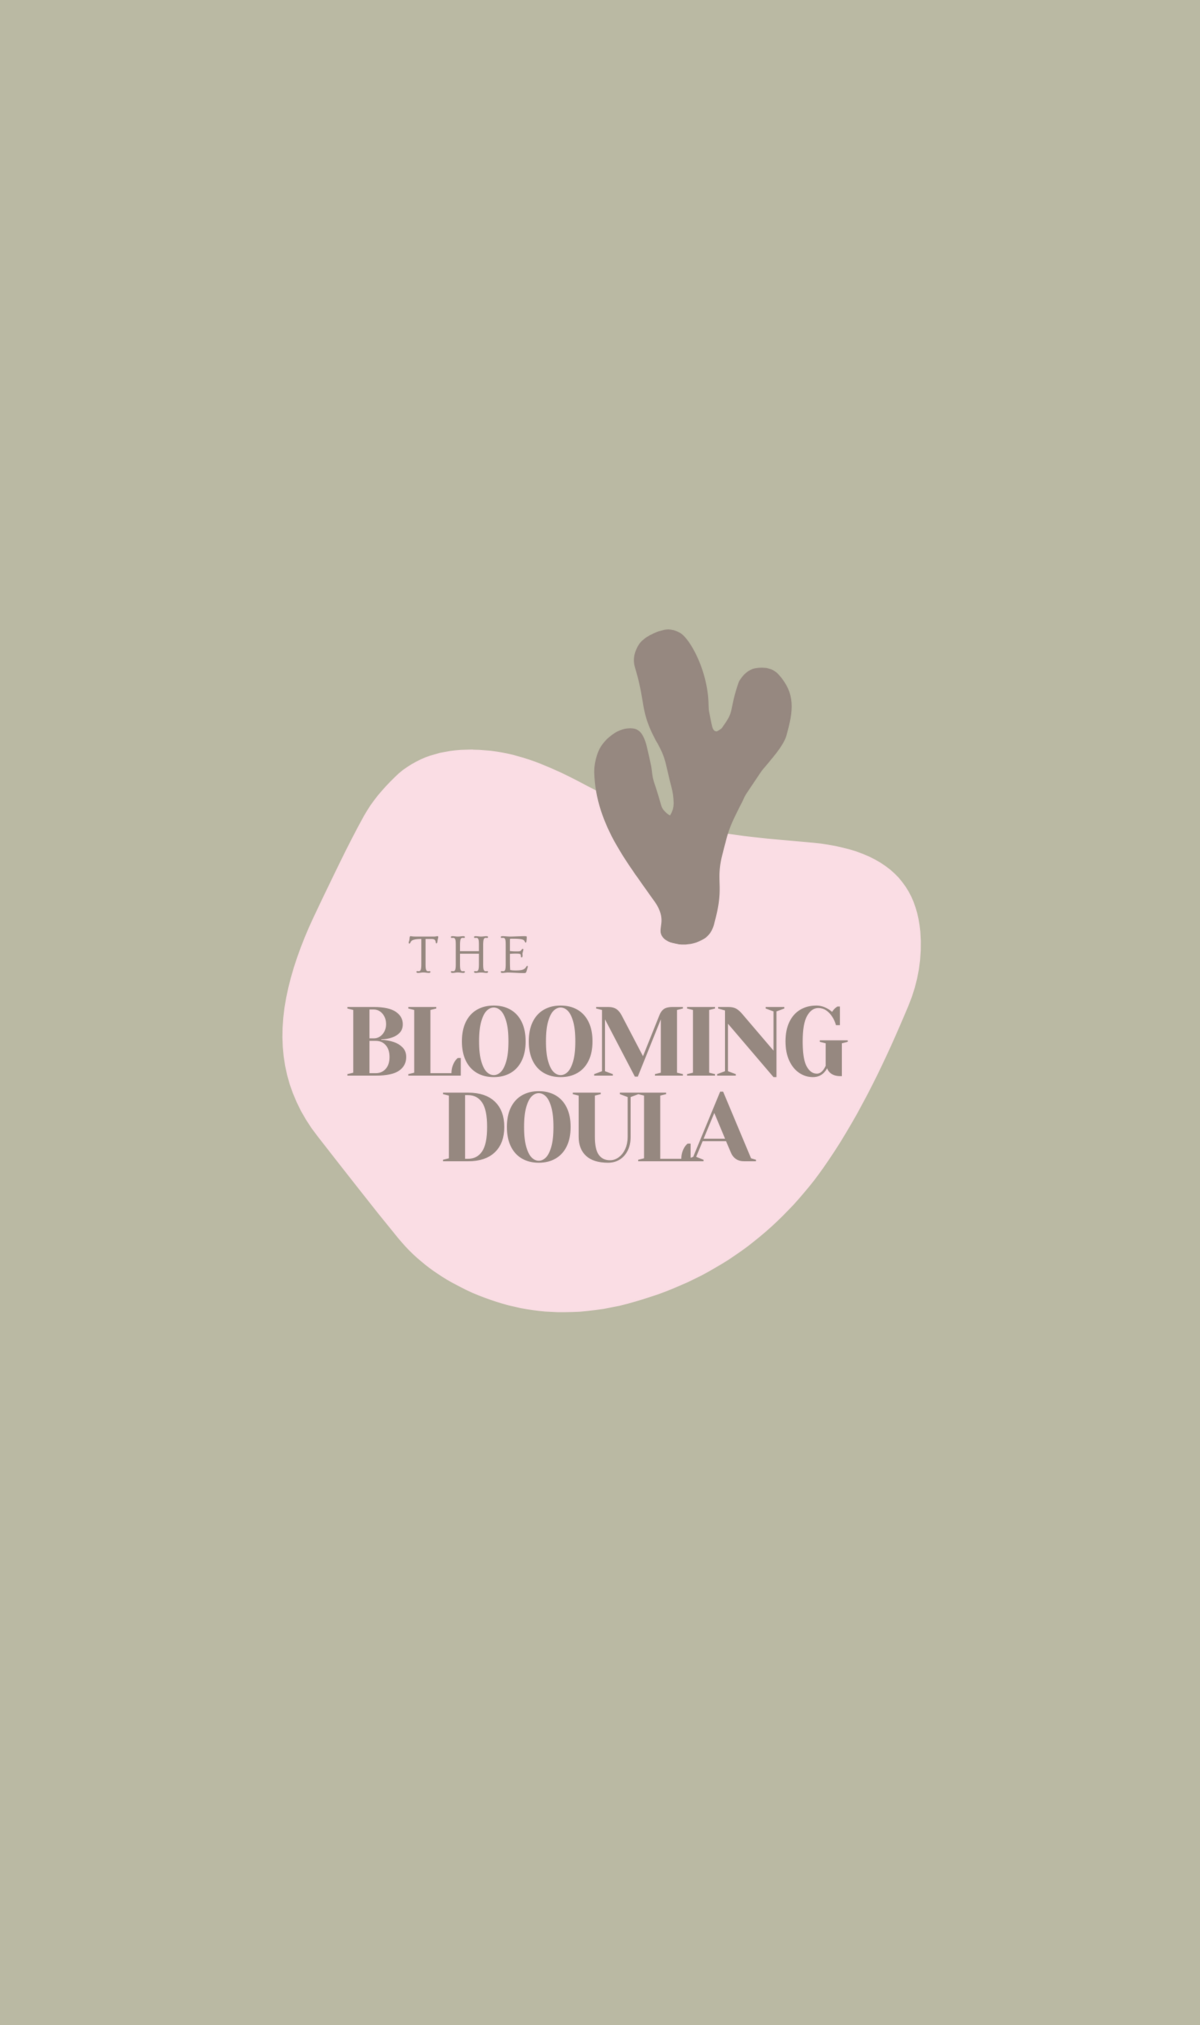 thebloomingdoula logo